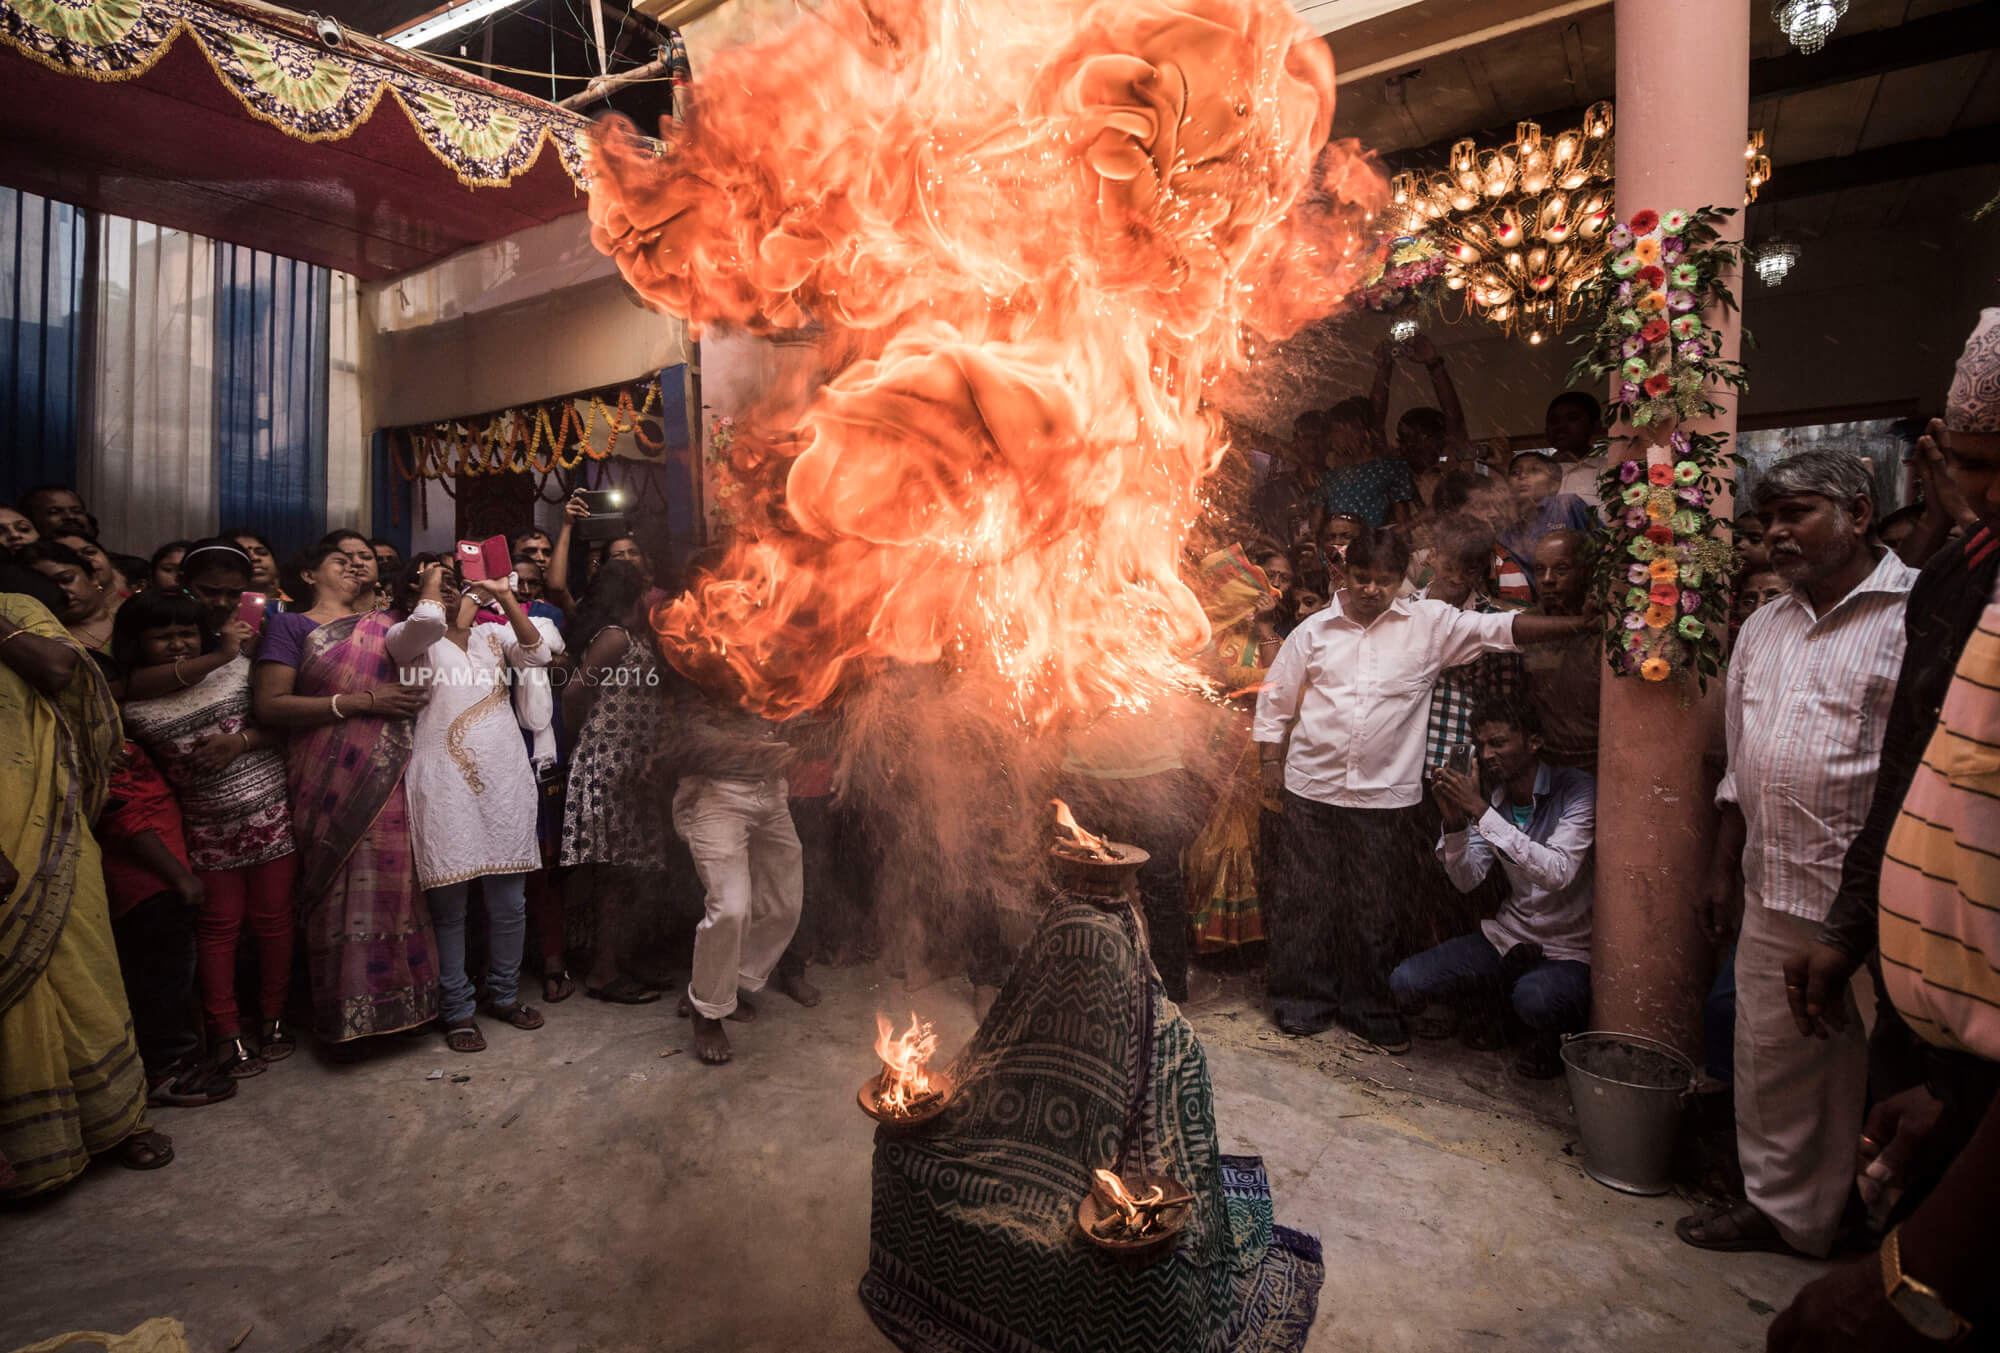 Dhuno Pora - The Raging Flame